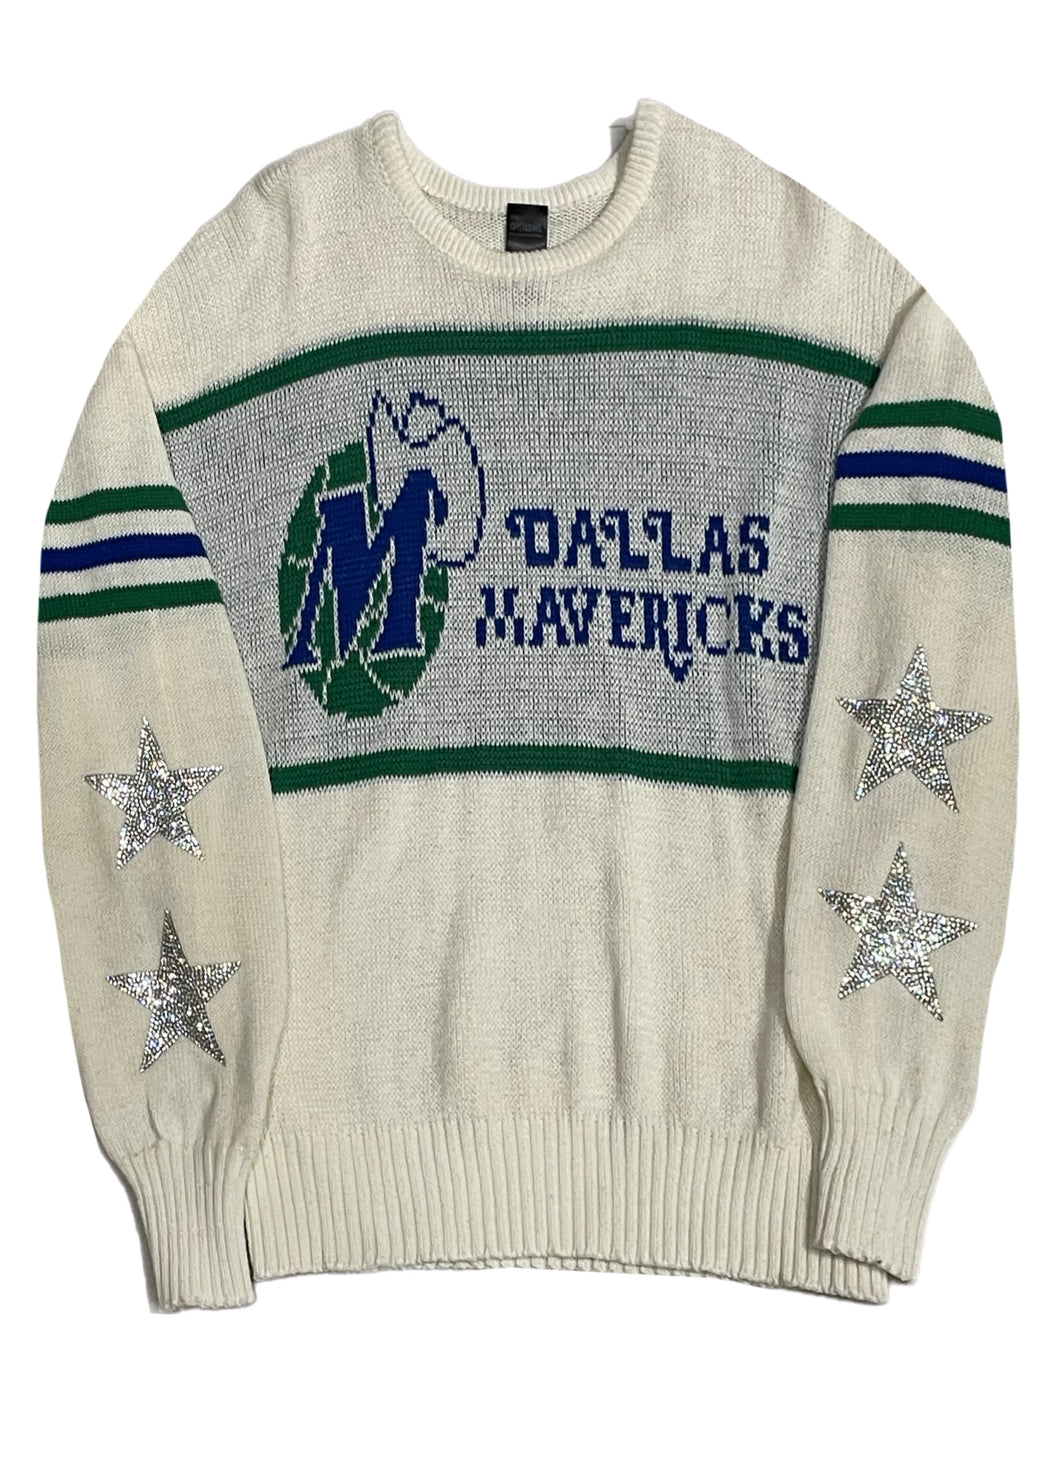 Dallas Mavericks, NFL One of a KIND Vintage Sweatshirt with Crystal Star Design